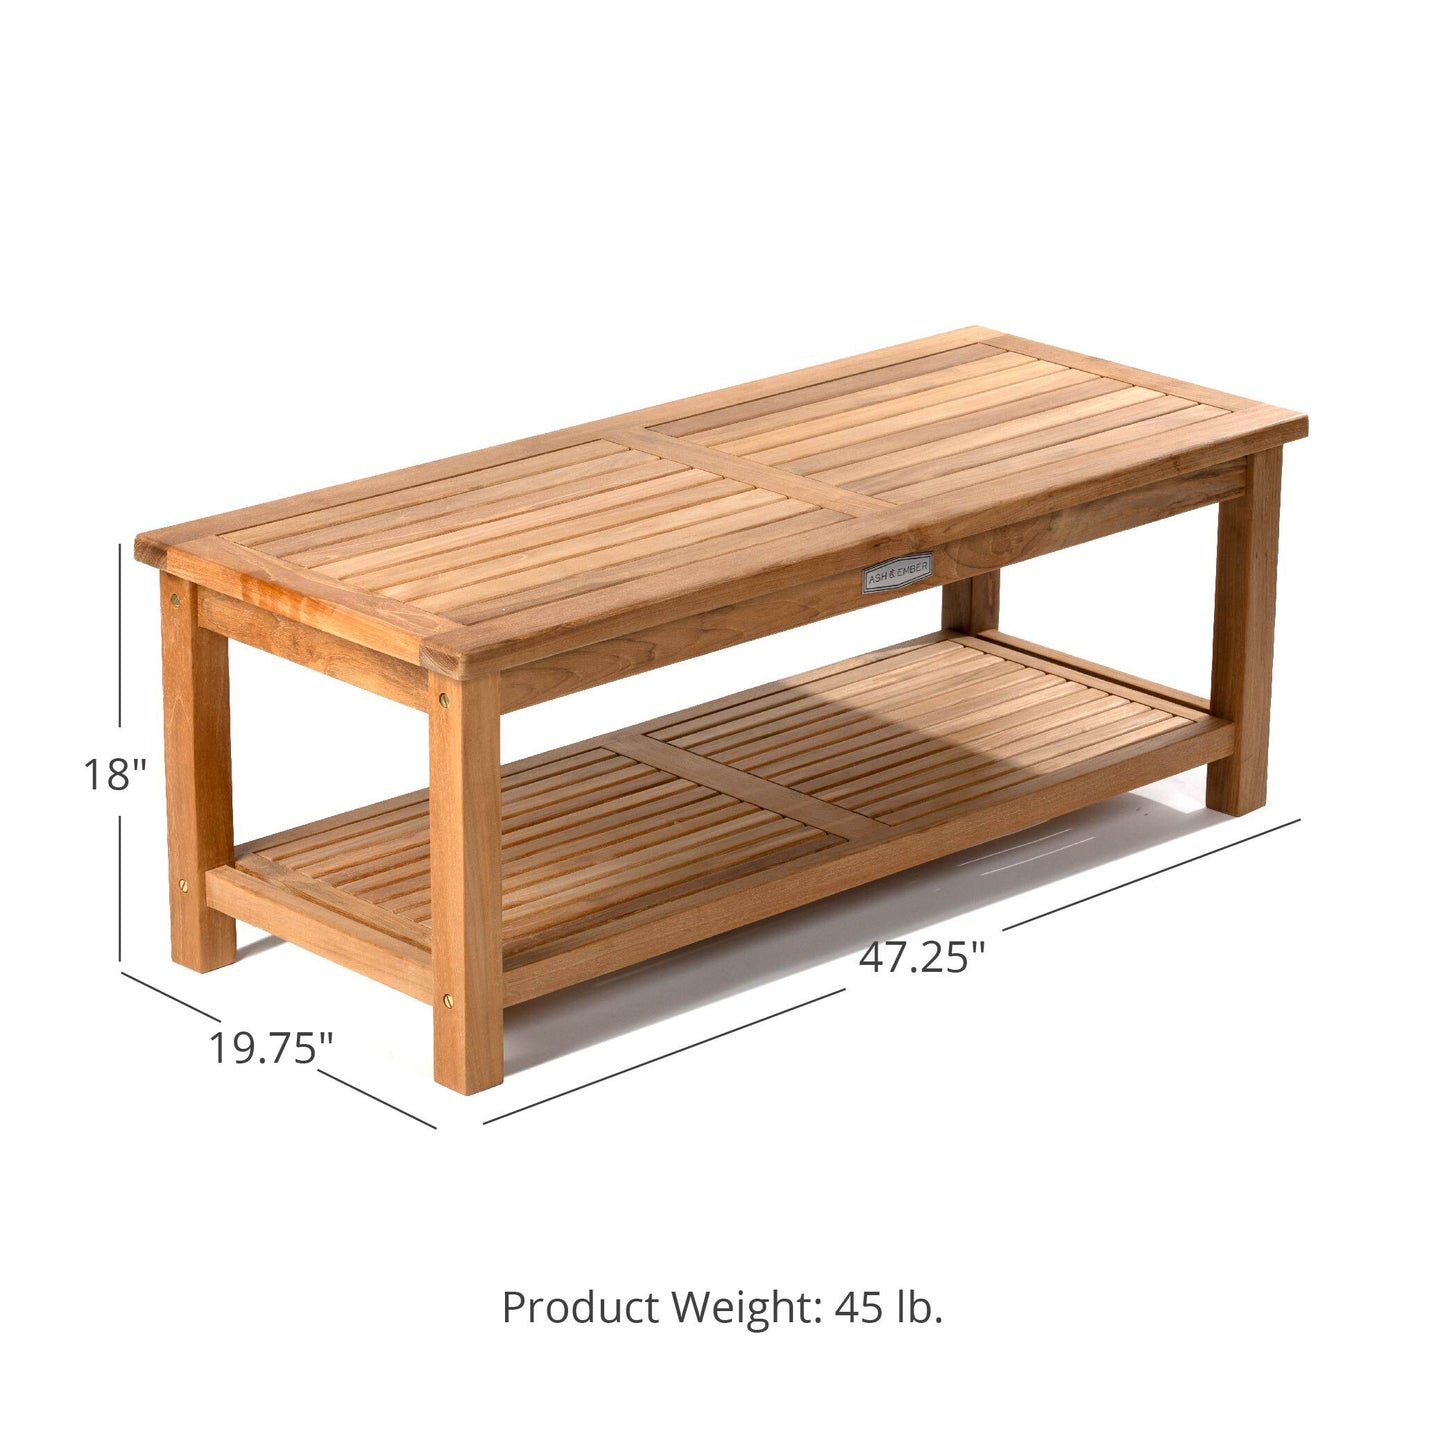 Sierra Grade A Teak 47" Outdoor Coffee Table with Shelf - view 9